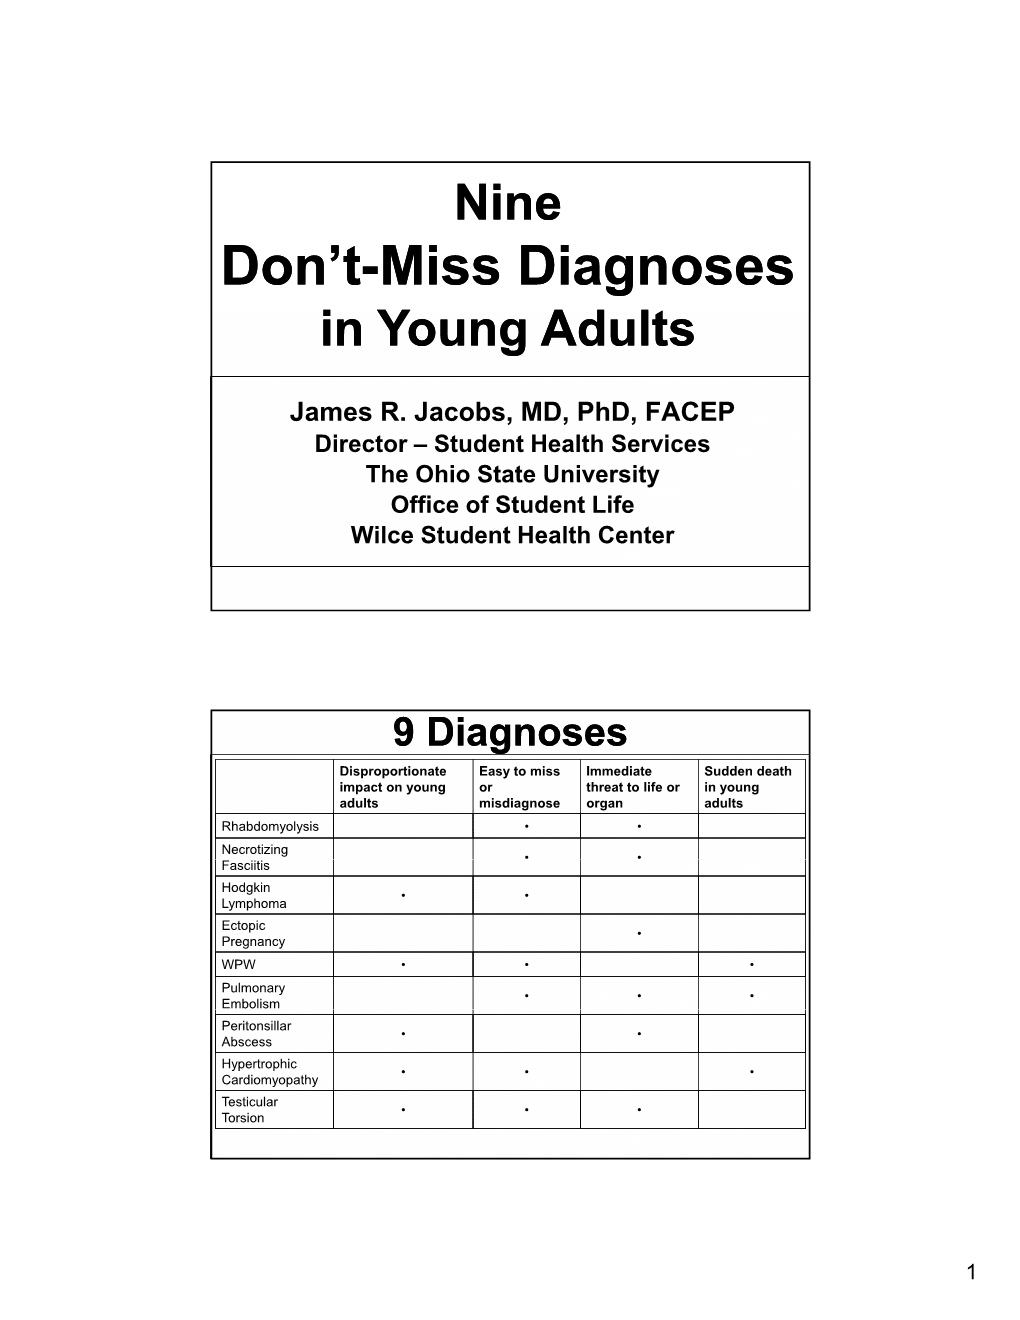 Don't-Miss Diagnoses